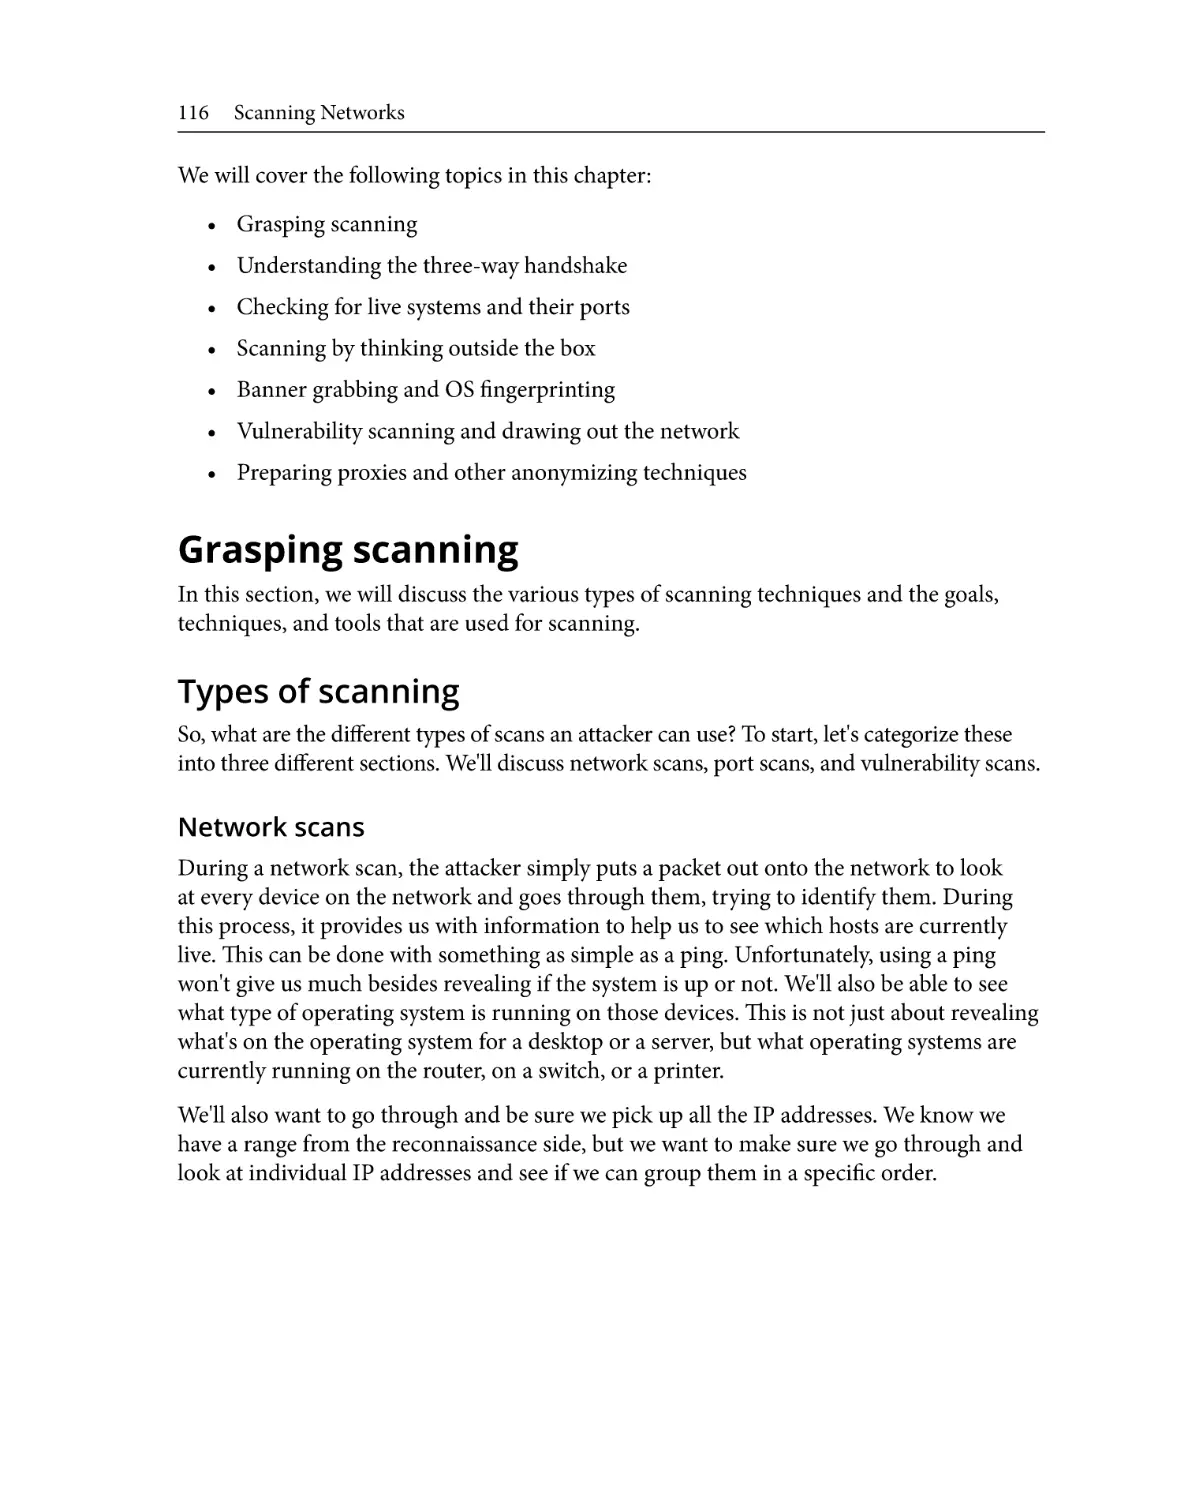 Grasping scanning
Types of scanning